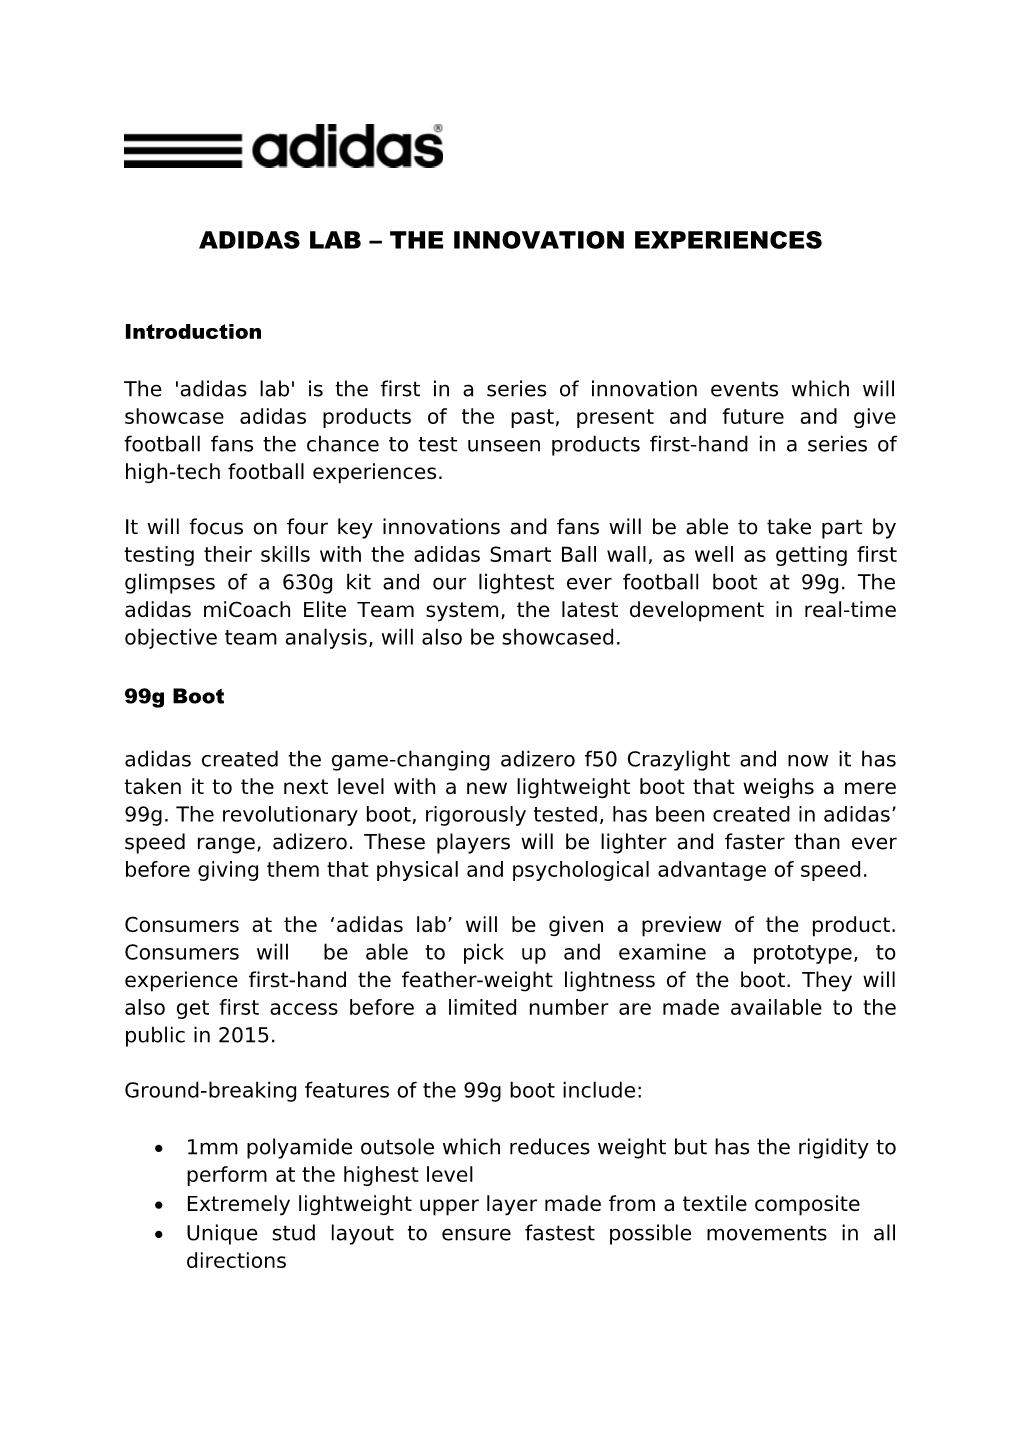 Adidas Lab the Innovation Experiences